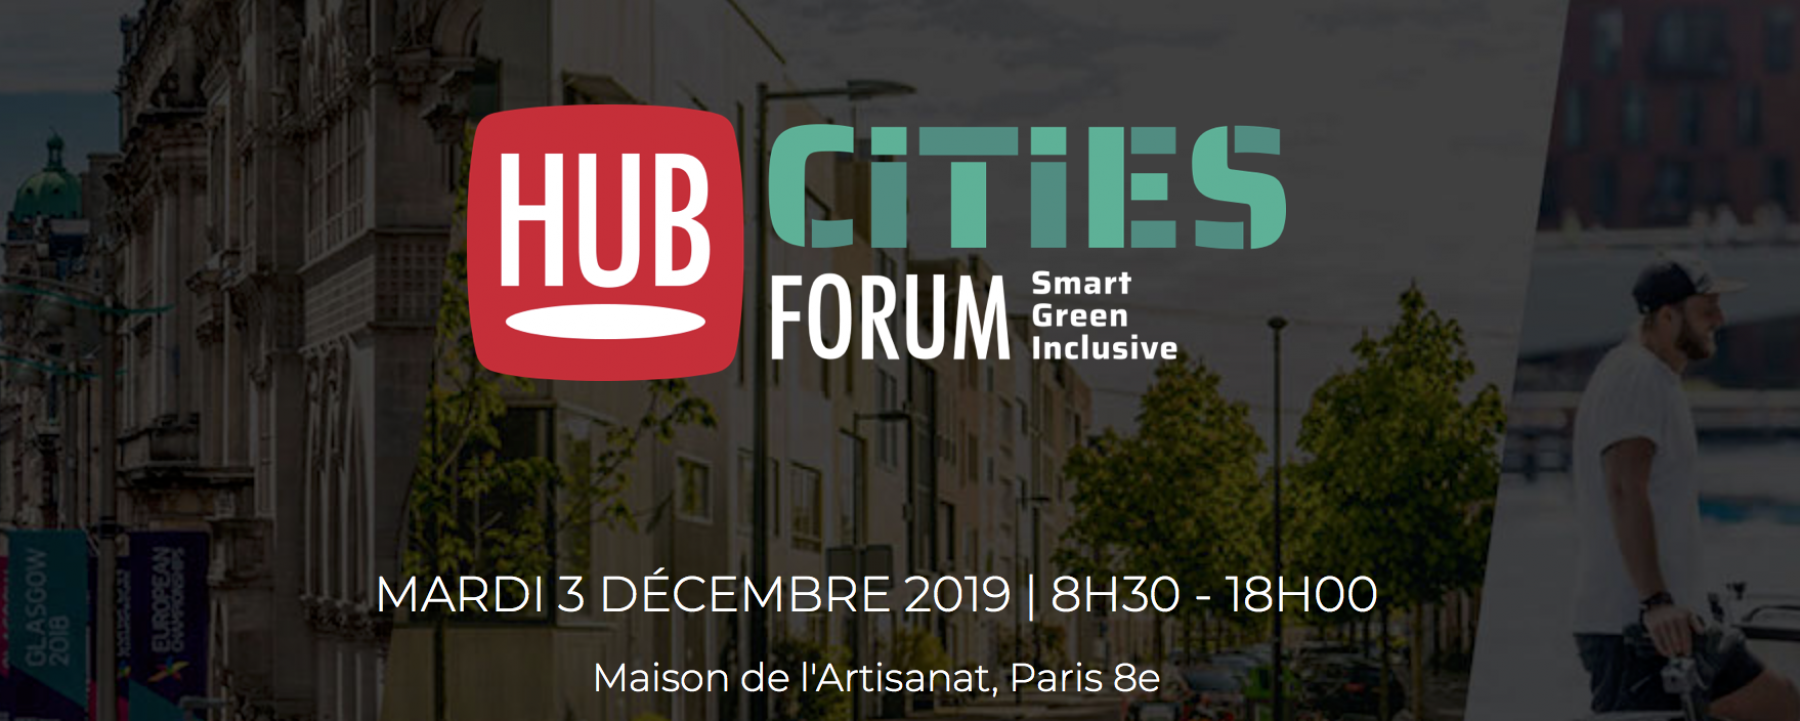 HUB Smart Cities Forum 2019